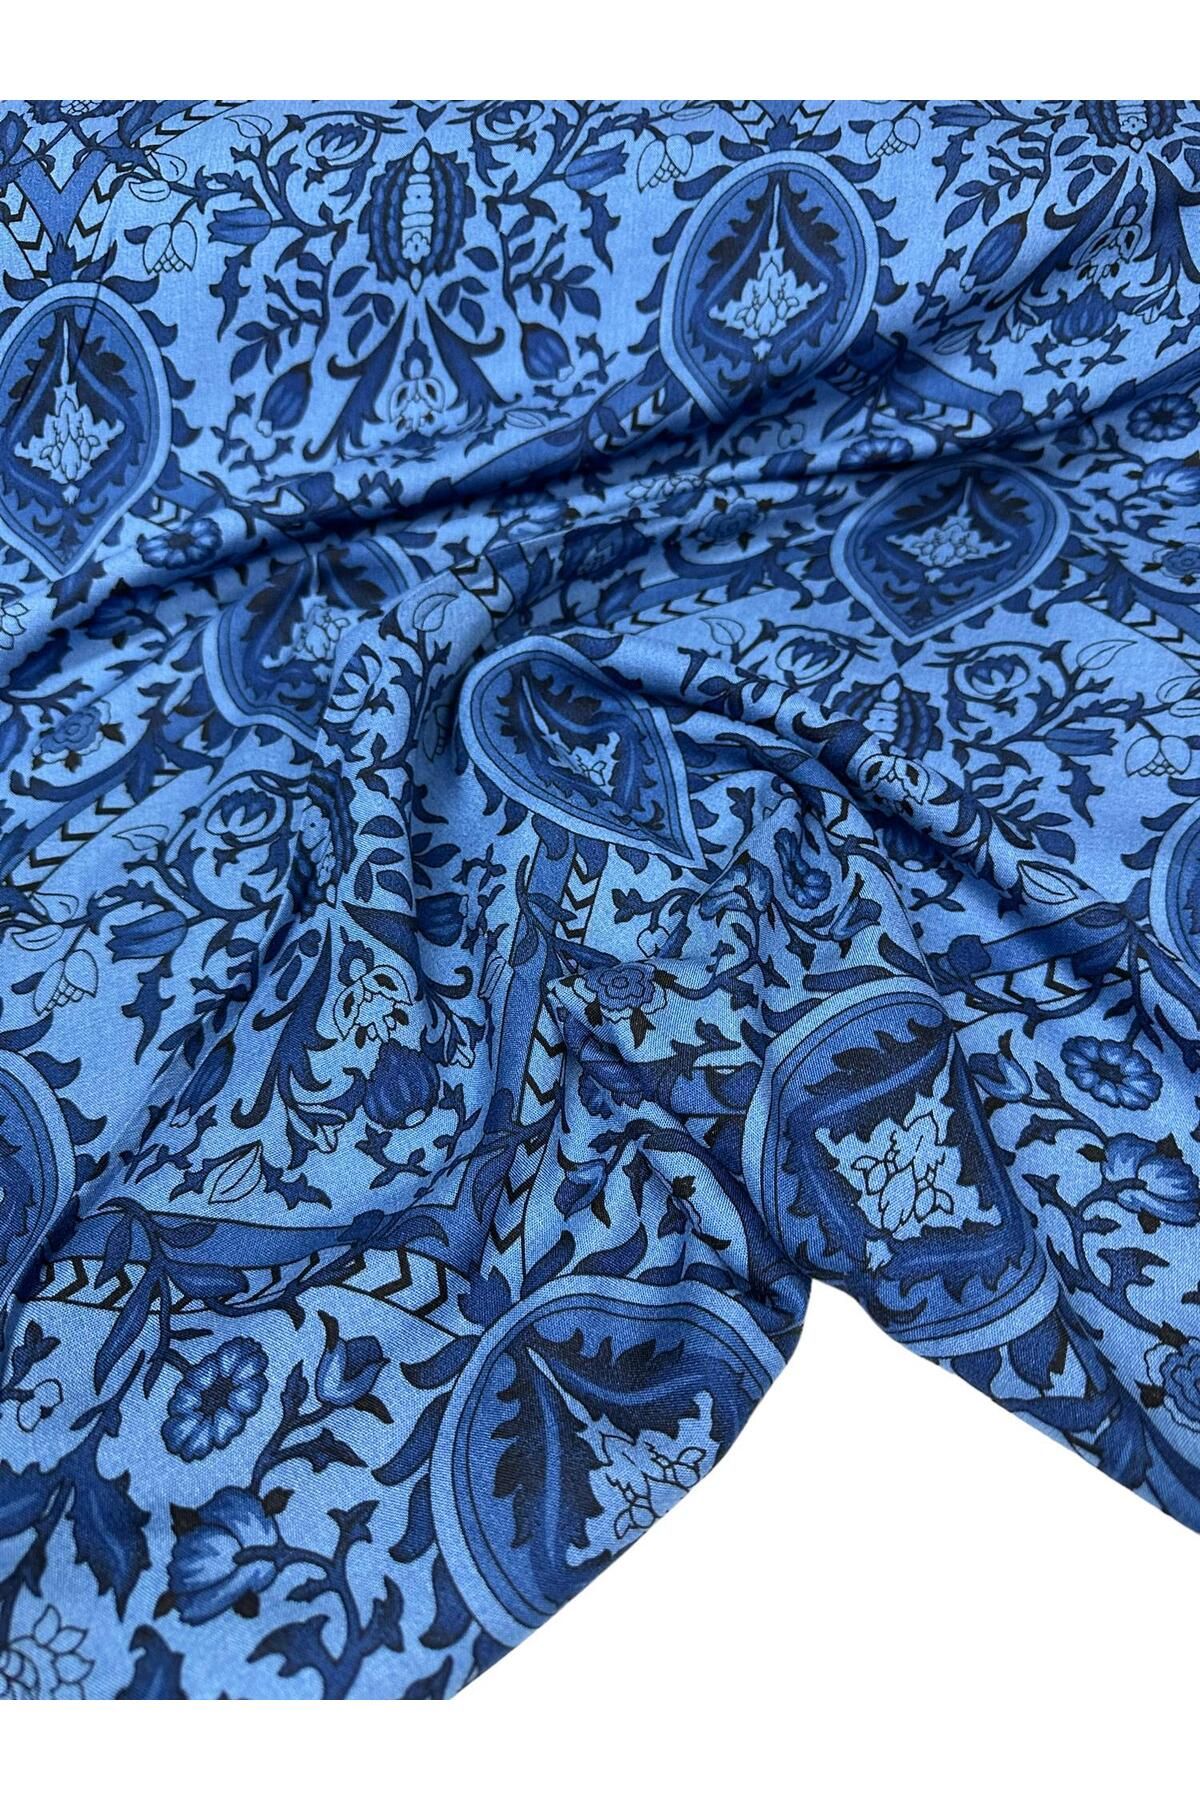 ipekkumaş Mavi Ikat Desen Pamuklu Viskon Elbiselik Kumaş